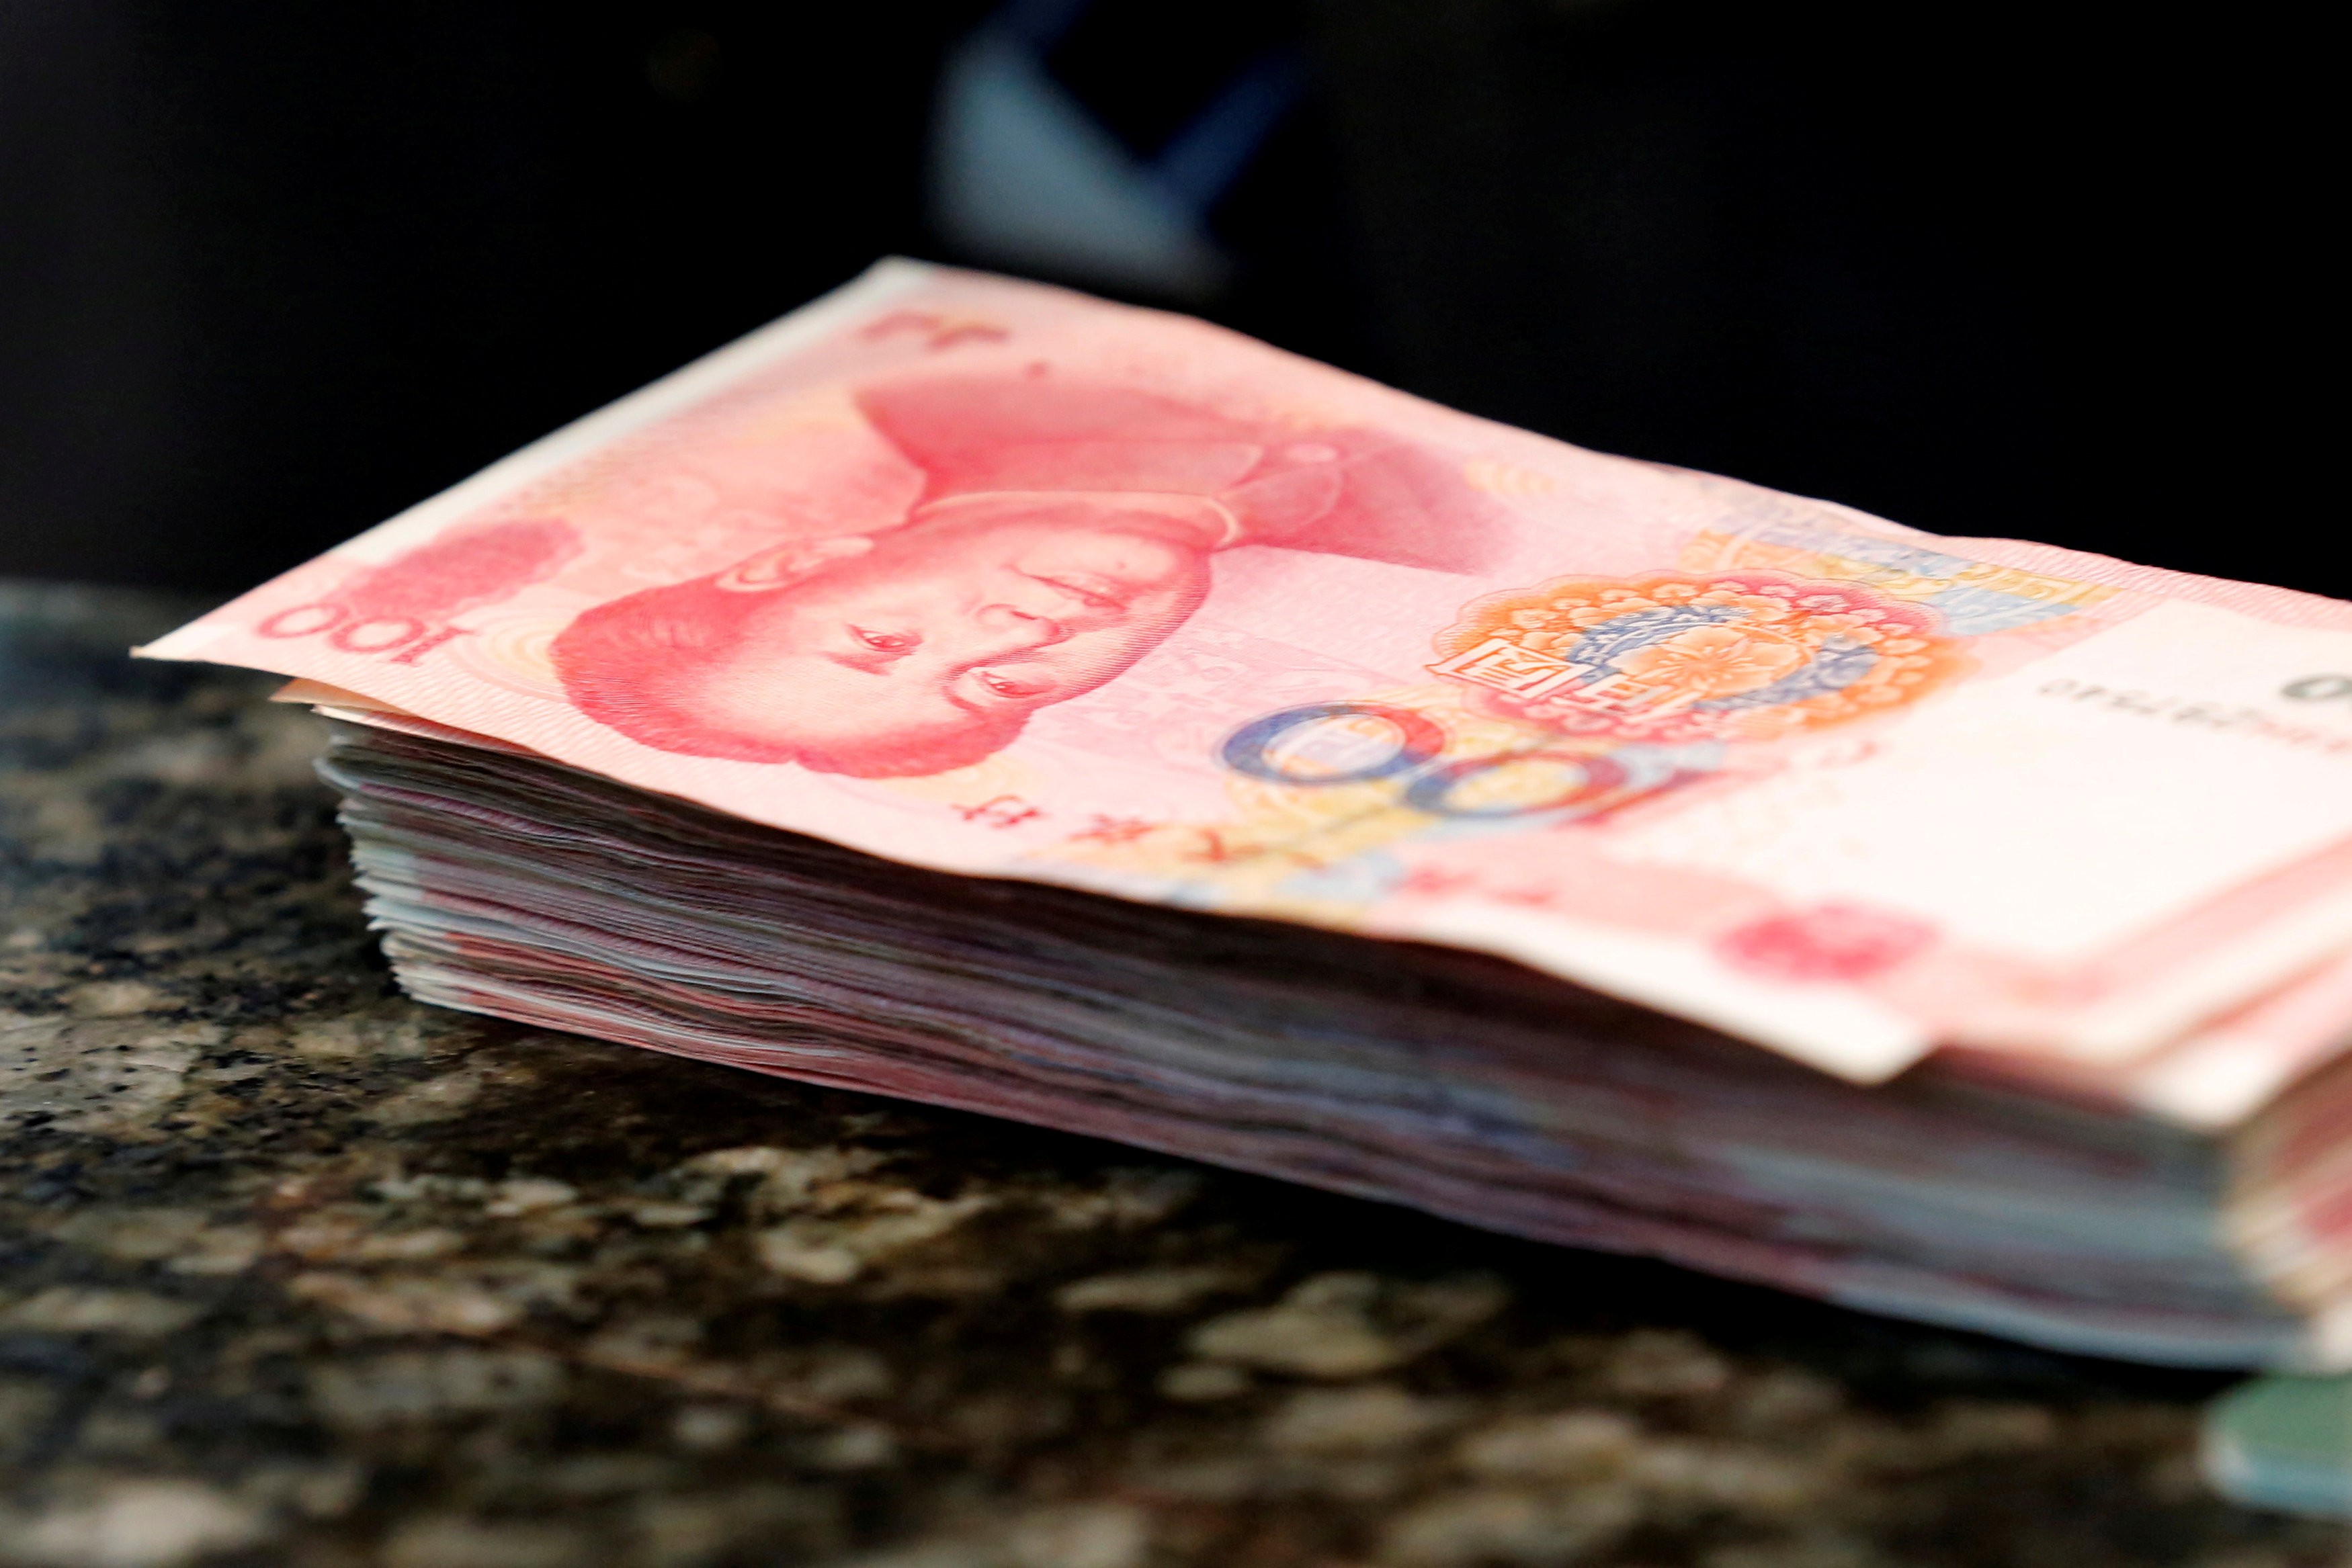 Yuan bounces back to end longest losing streak, after People's ...